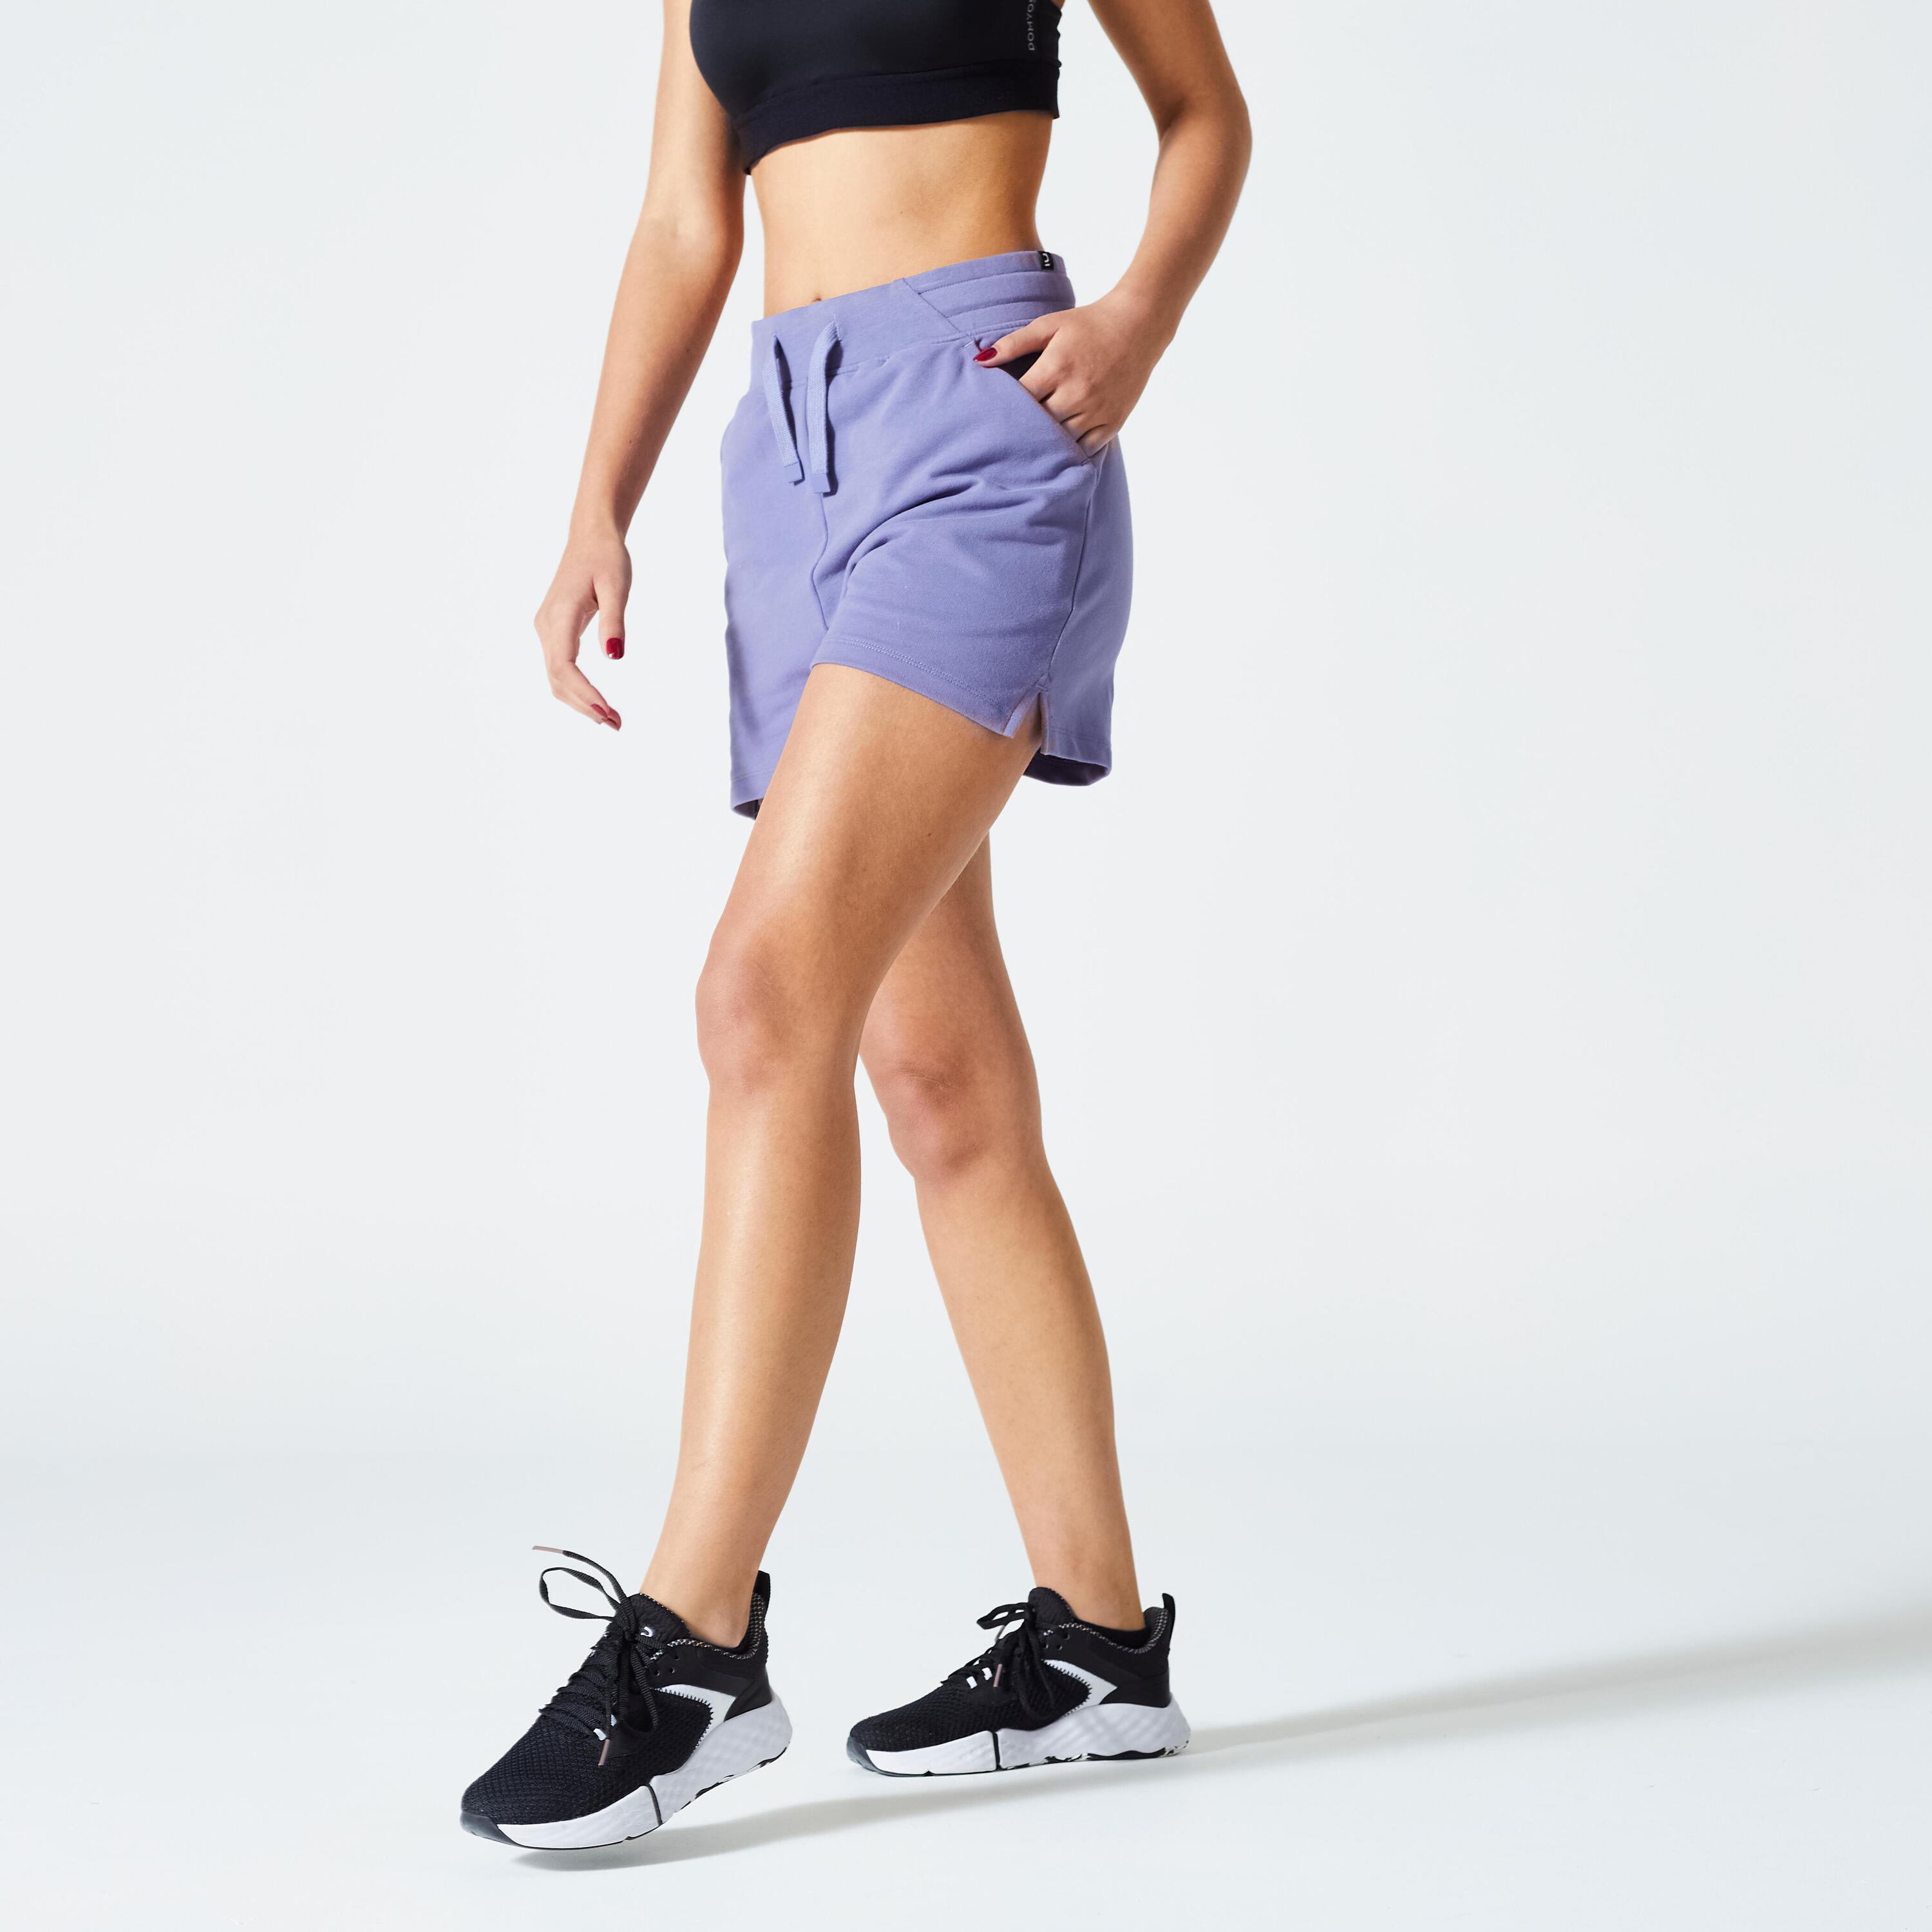 DOMYOS Women's Cotton Fitness Shorts 520 with Pocket - Neon Purple